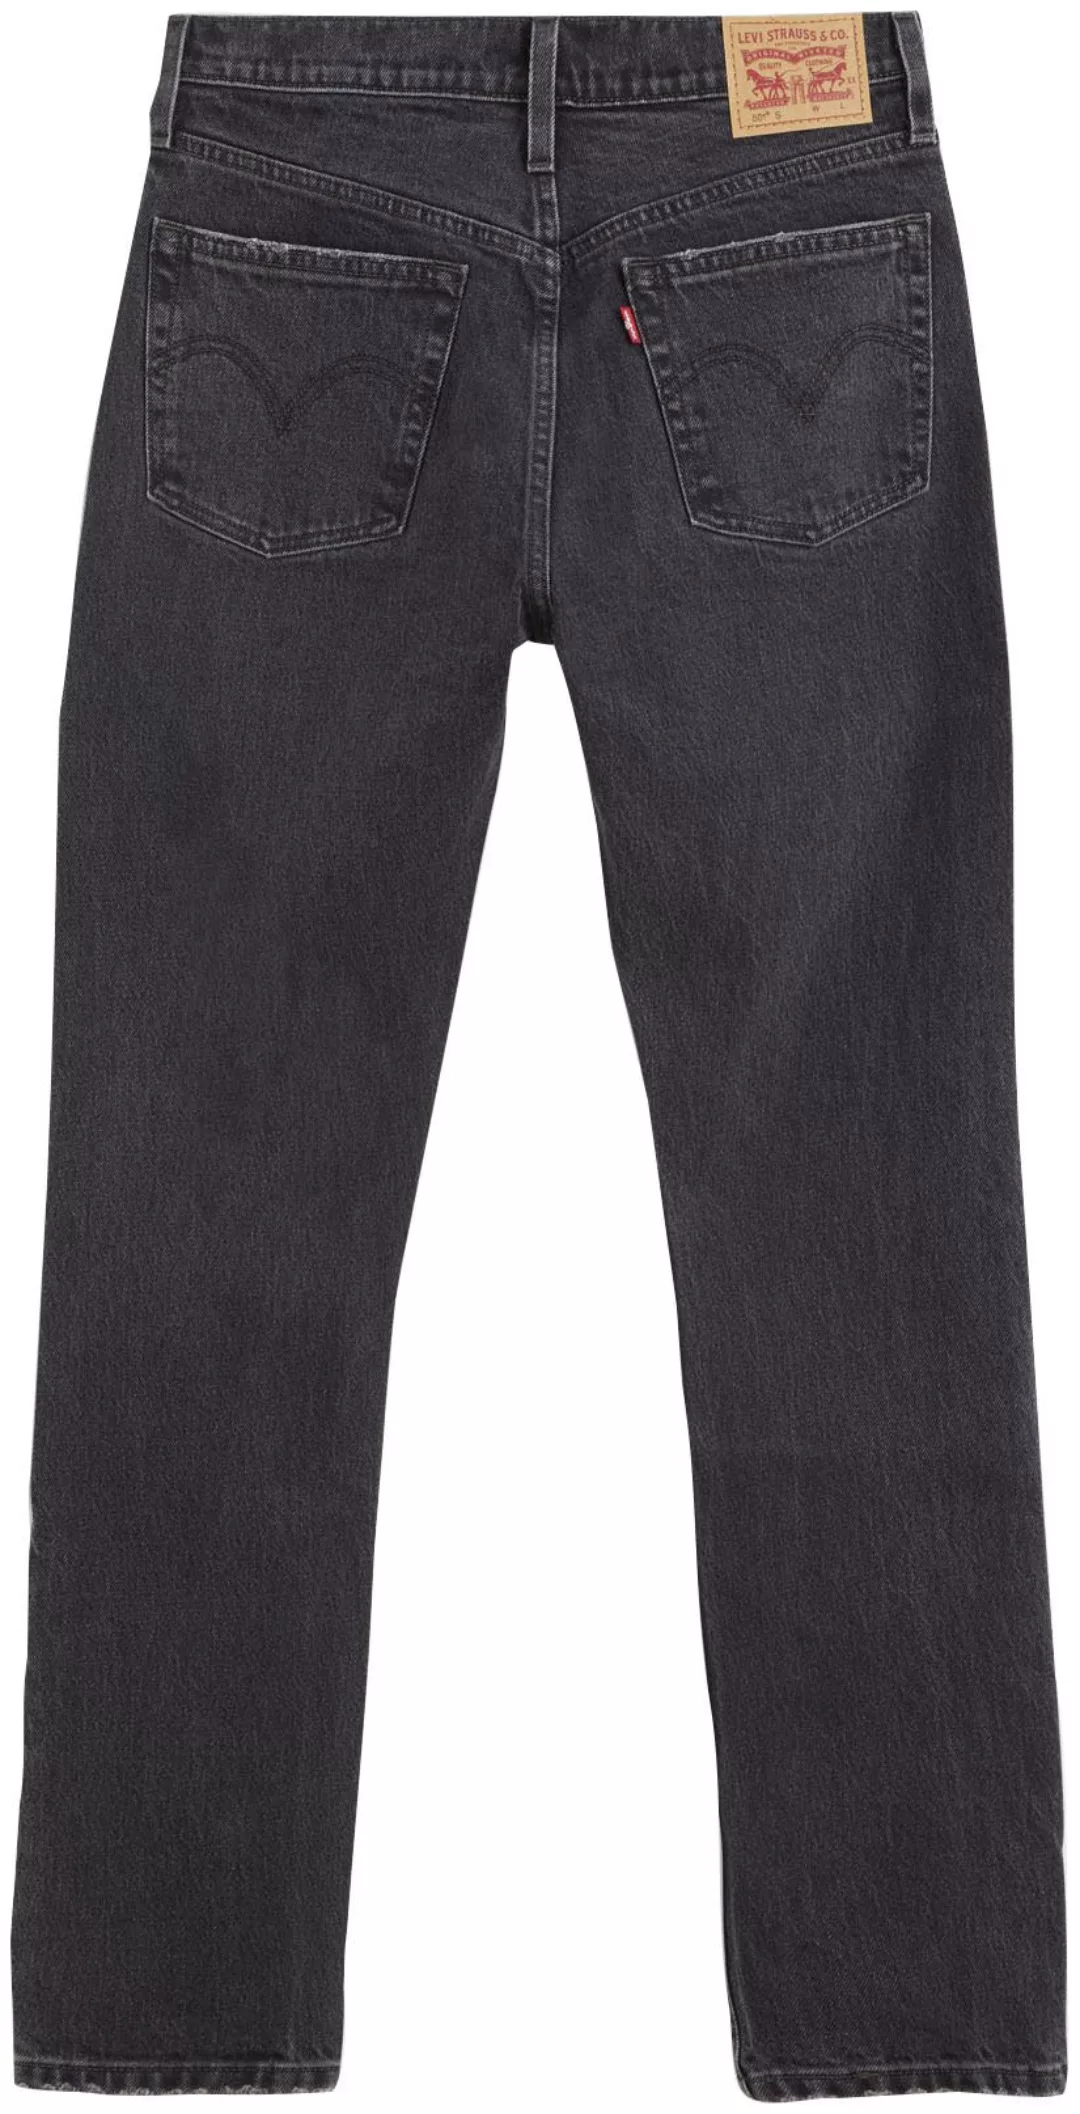 Levis Skinny-fit-Jeans "501 SKINNY", 501 Collection günstig online kaufen